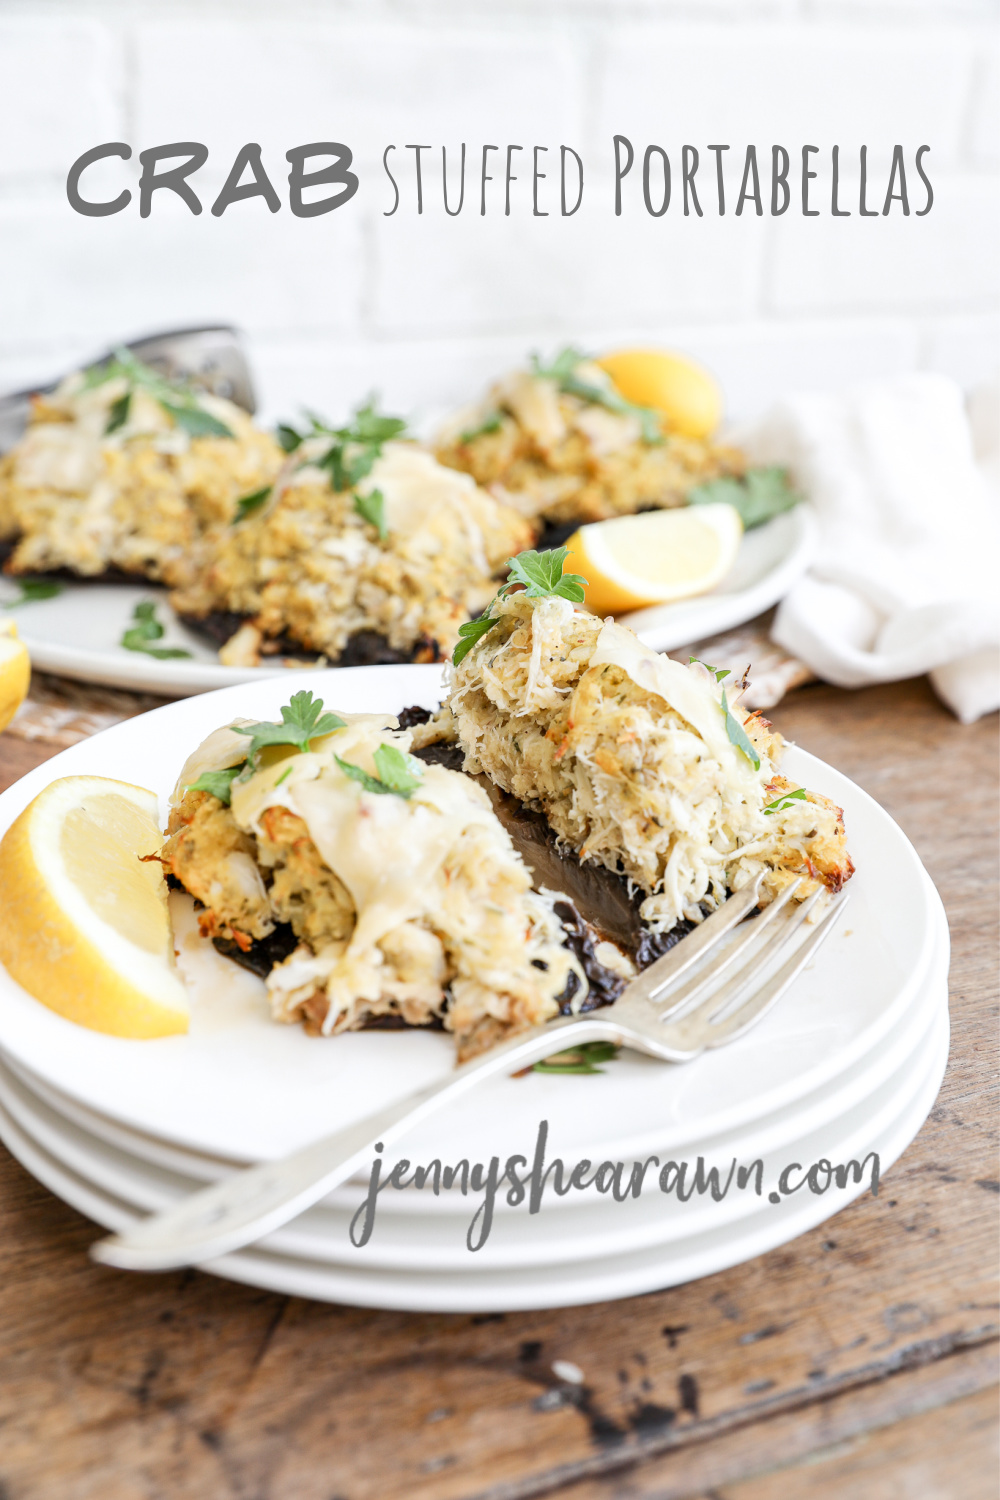 Crab Stuffed Portabello Mushrooms | Crab | Jenny Shea Rawn